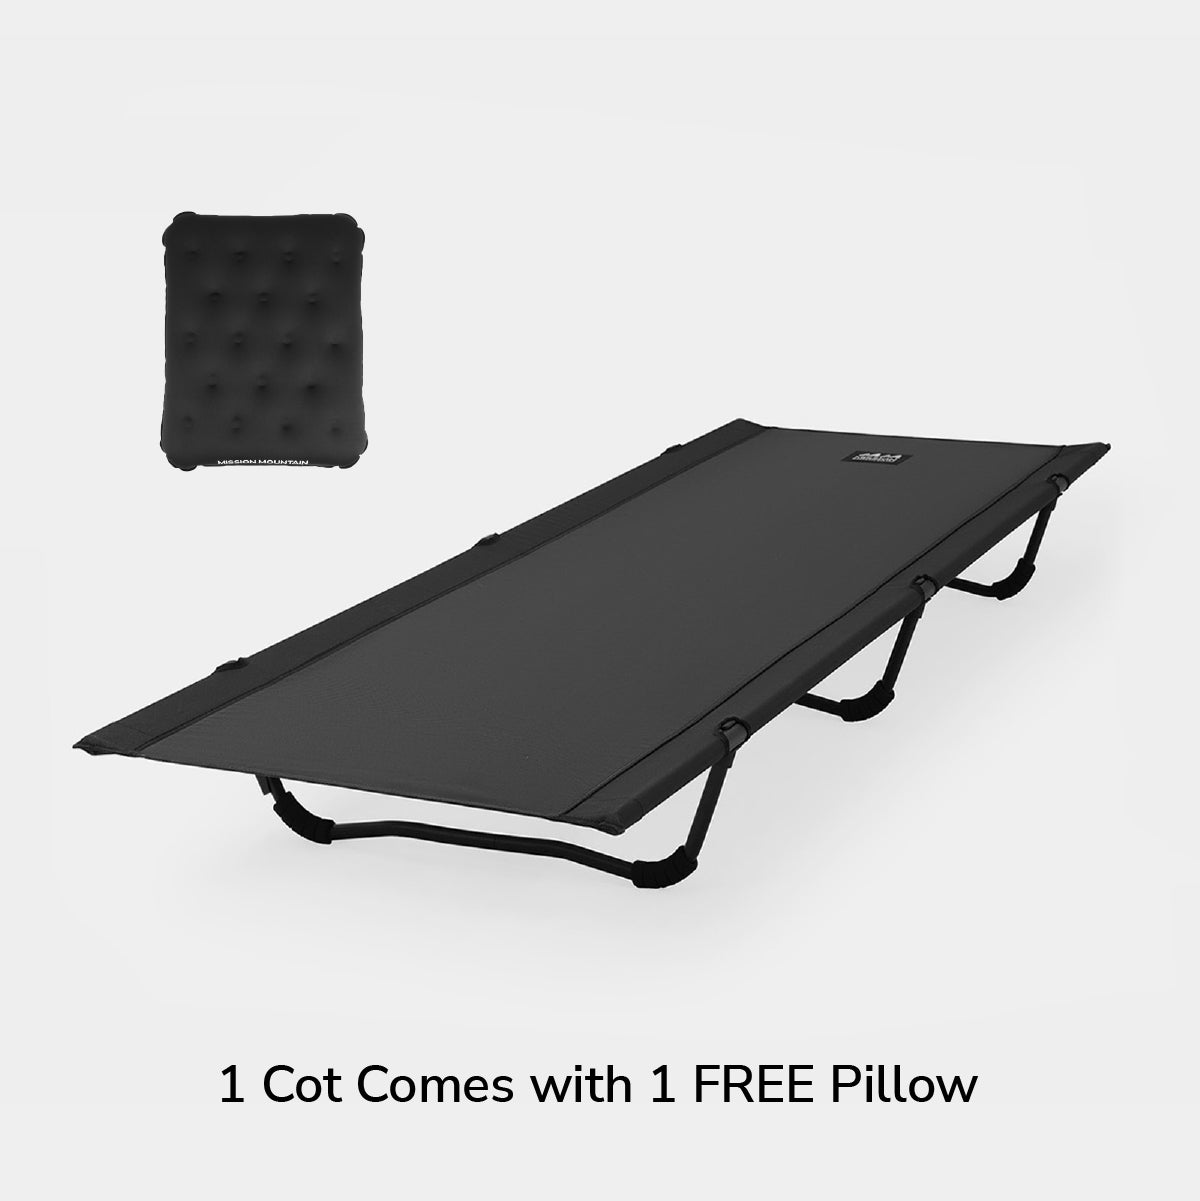 A4 Ultralight & Versatile Cot with Pillow